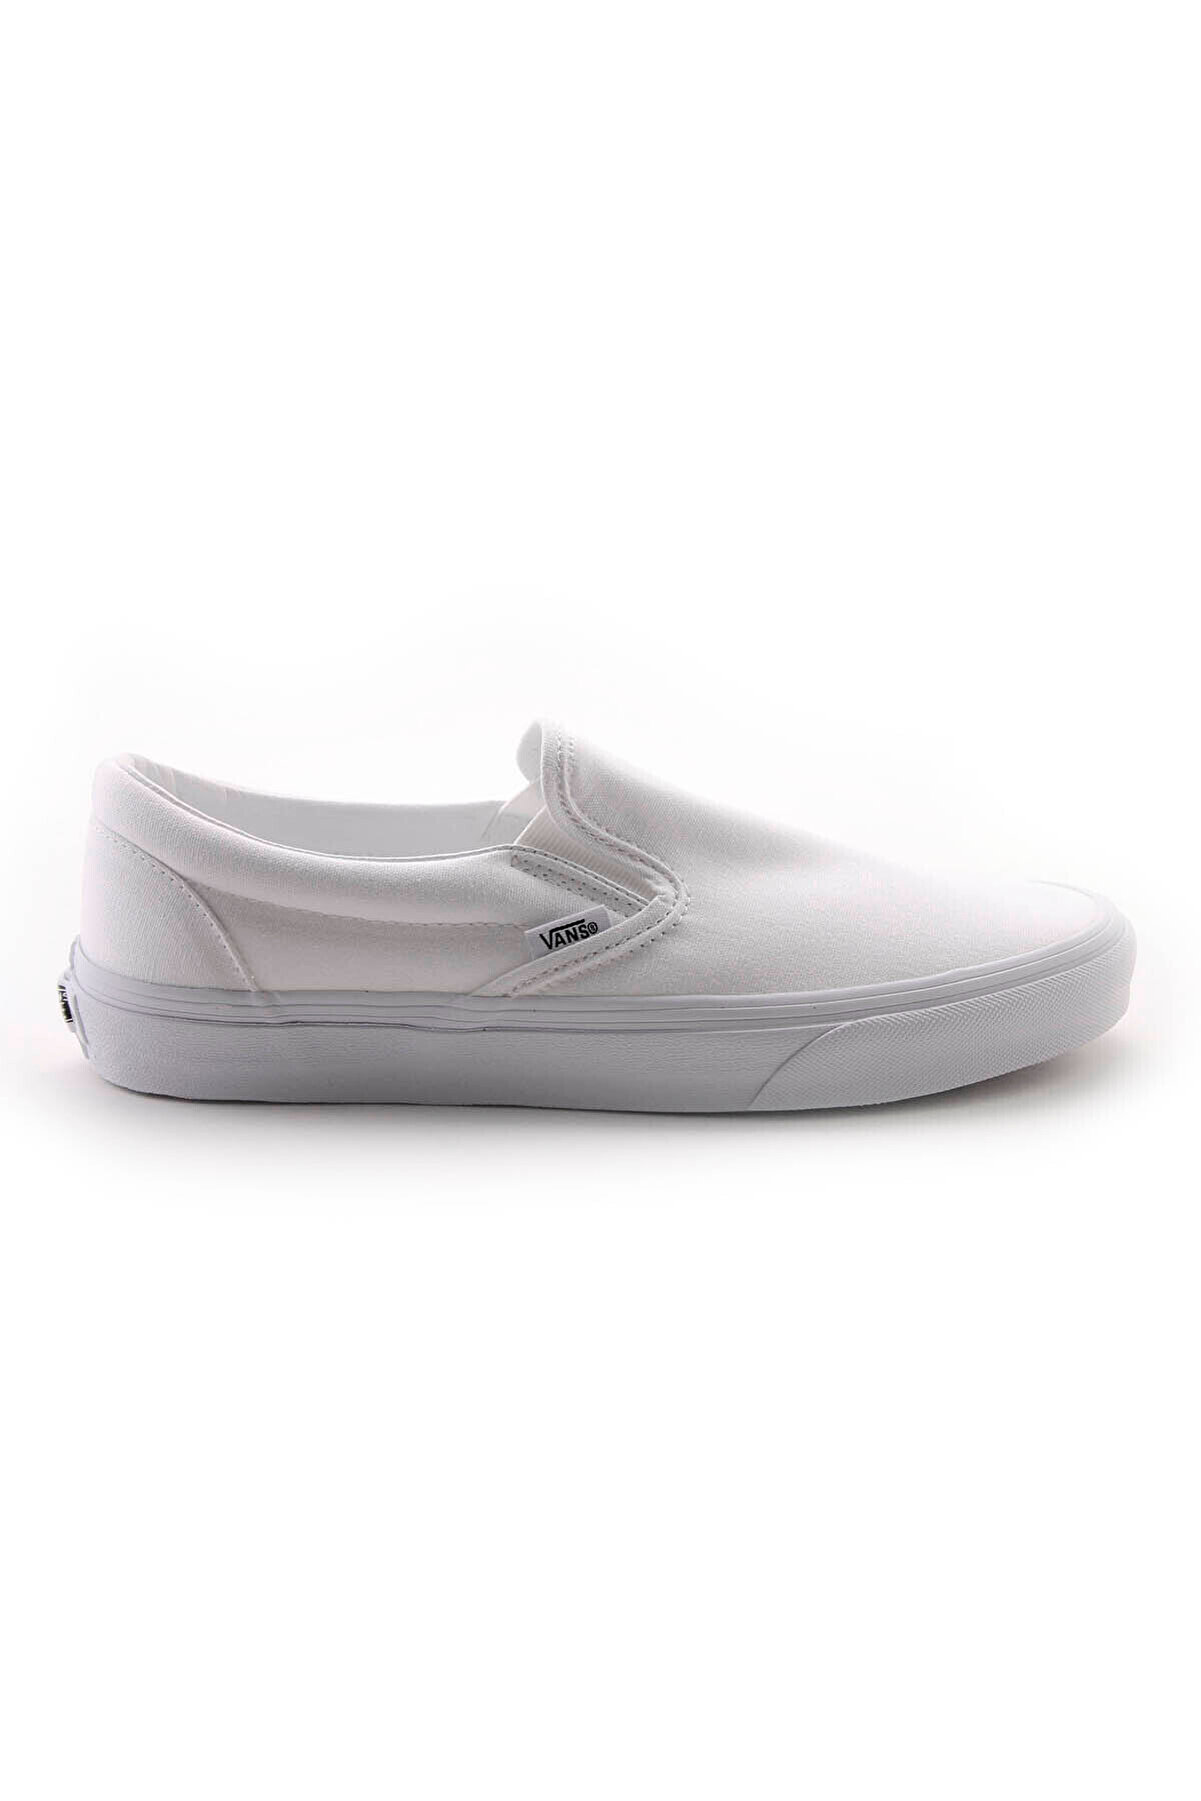 Vans Unisex Sneaker - Classic Slip-On - VEYEW00